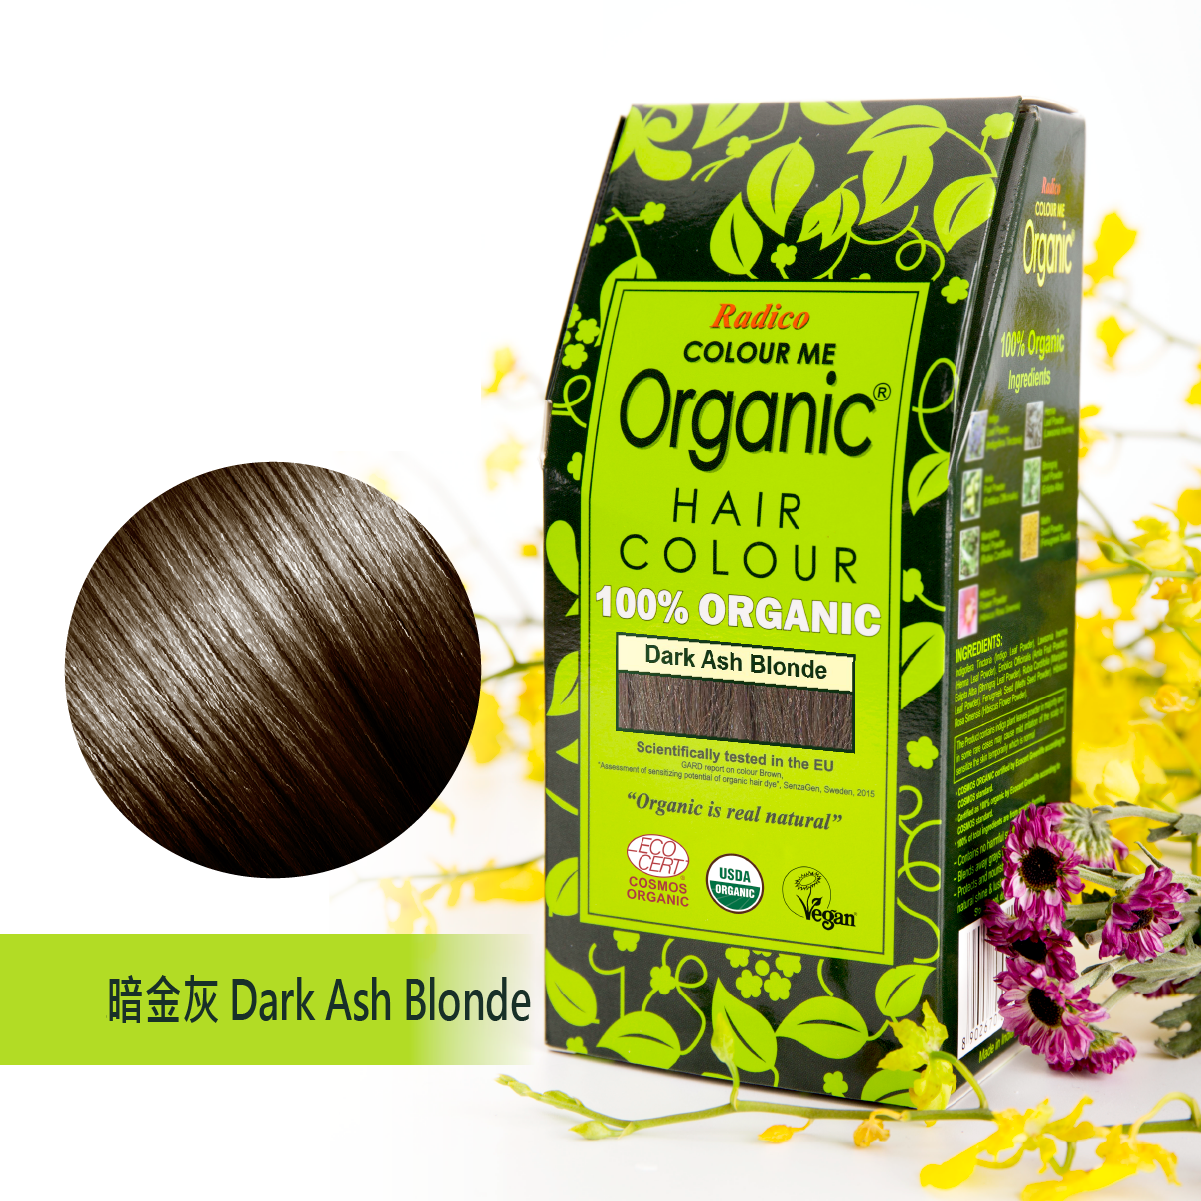 Radico Organic Hair Colour Dark Ash Blonde Hk Healthy And